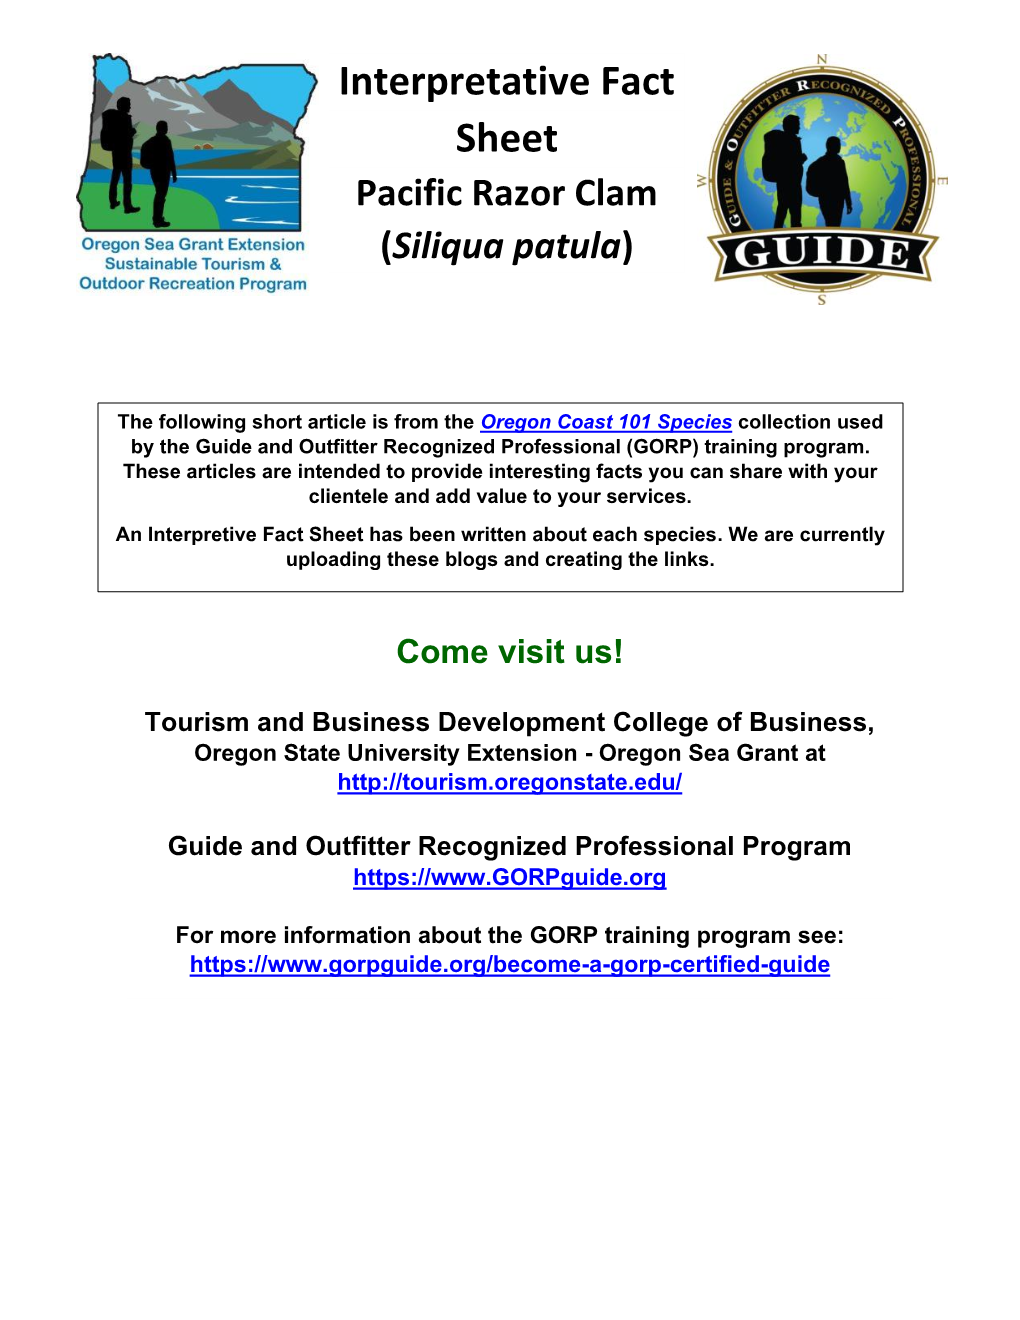 Pacific Razor Clam